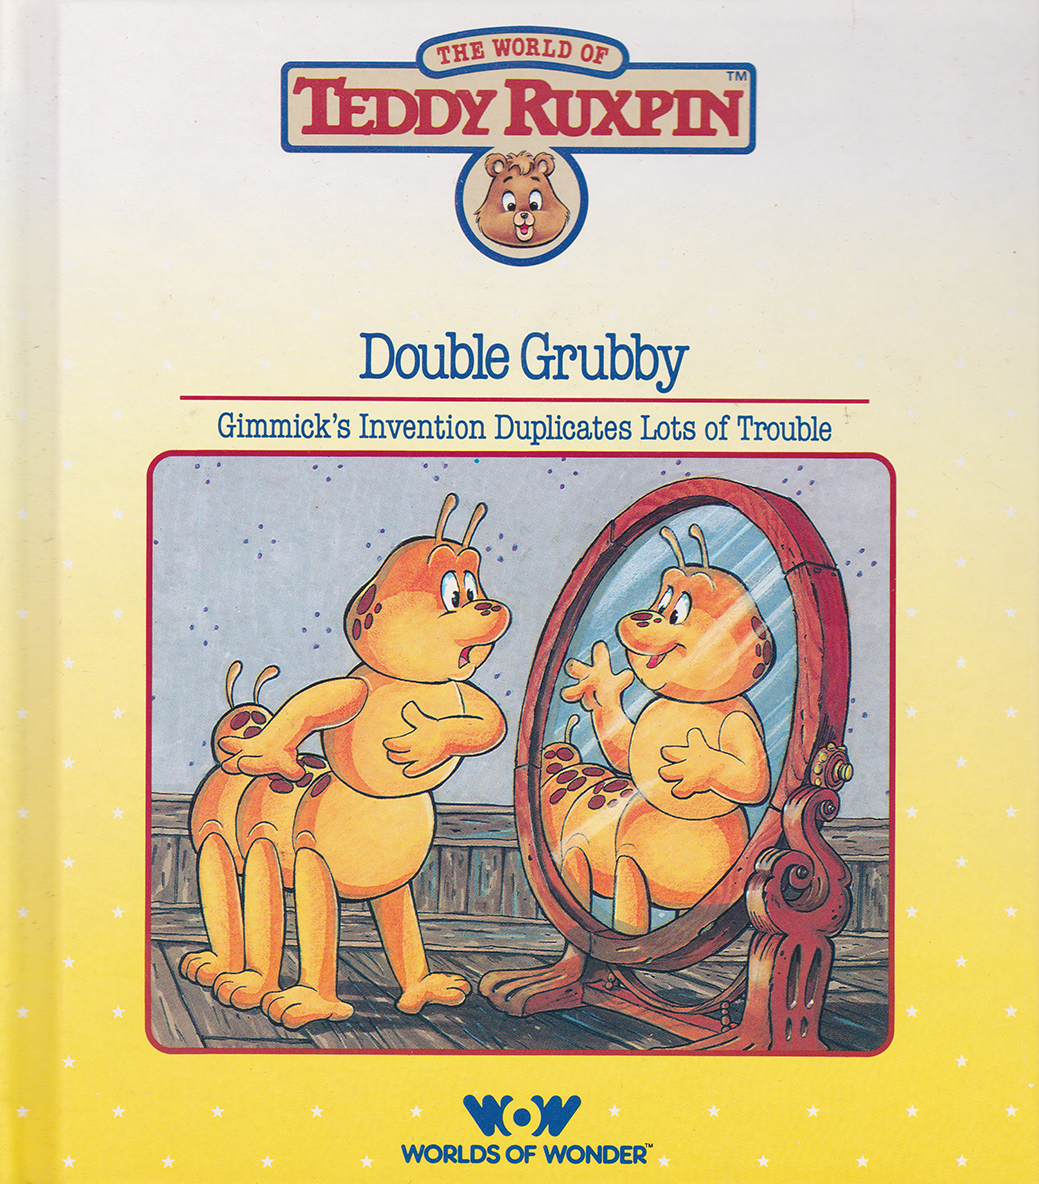 teddy ruxpin grubby